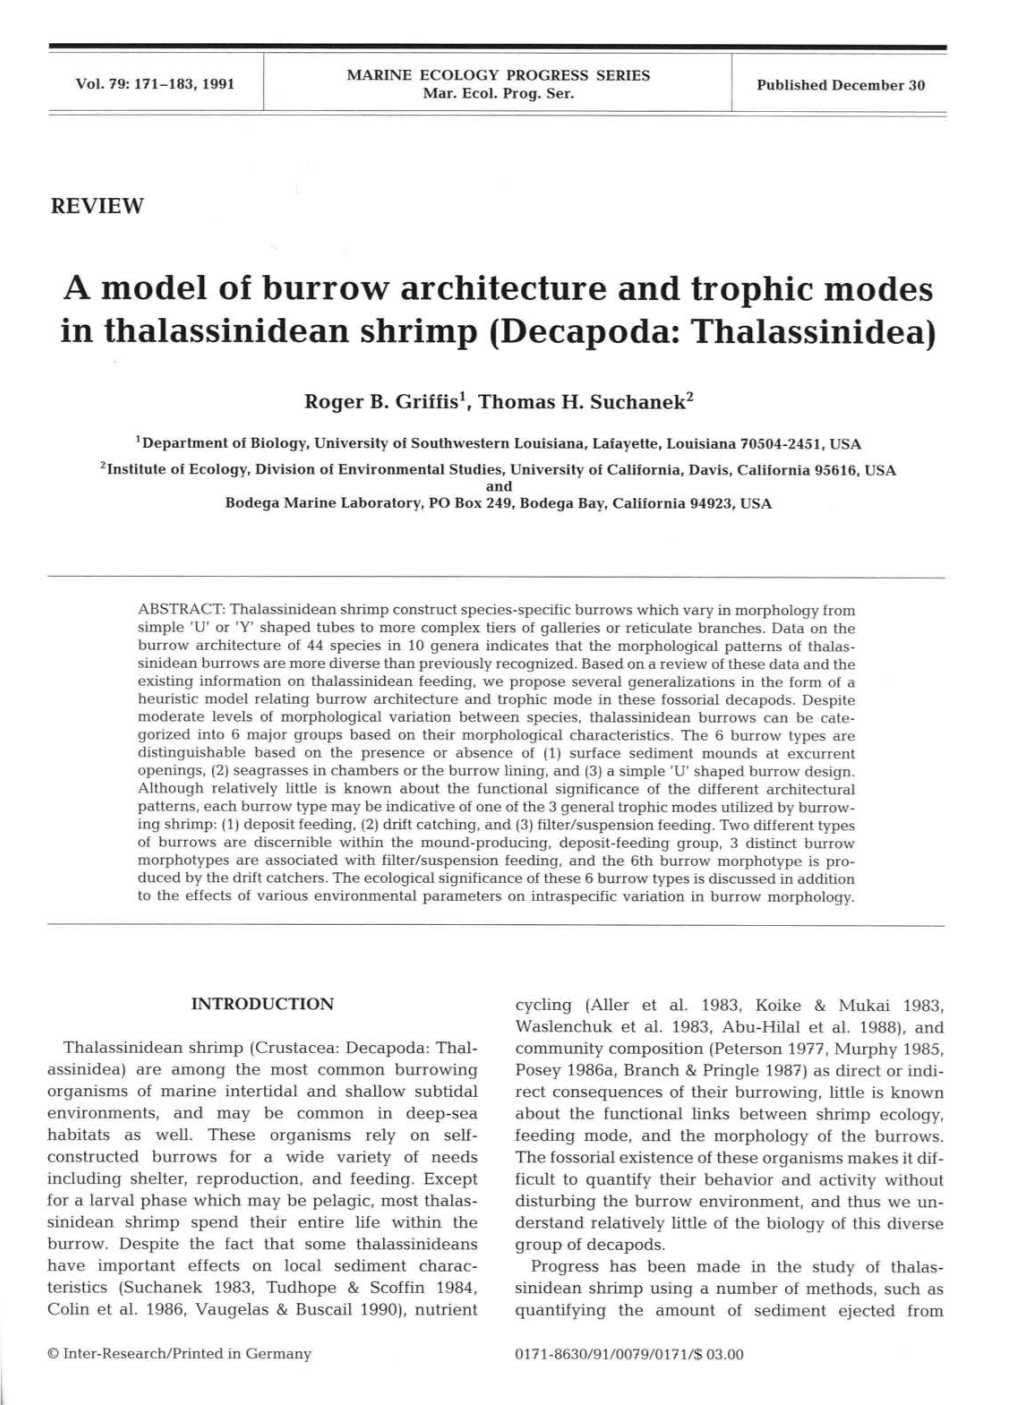 A Model of Burrow Architecture and Trophic Modes in Thalassinidean Shrimp (Decapoda: Thalassinidea)